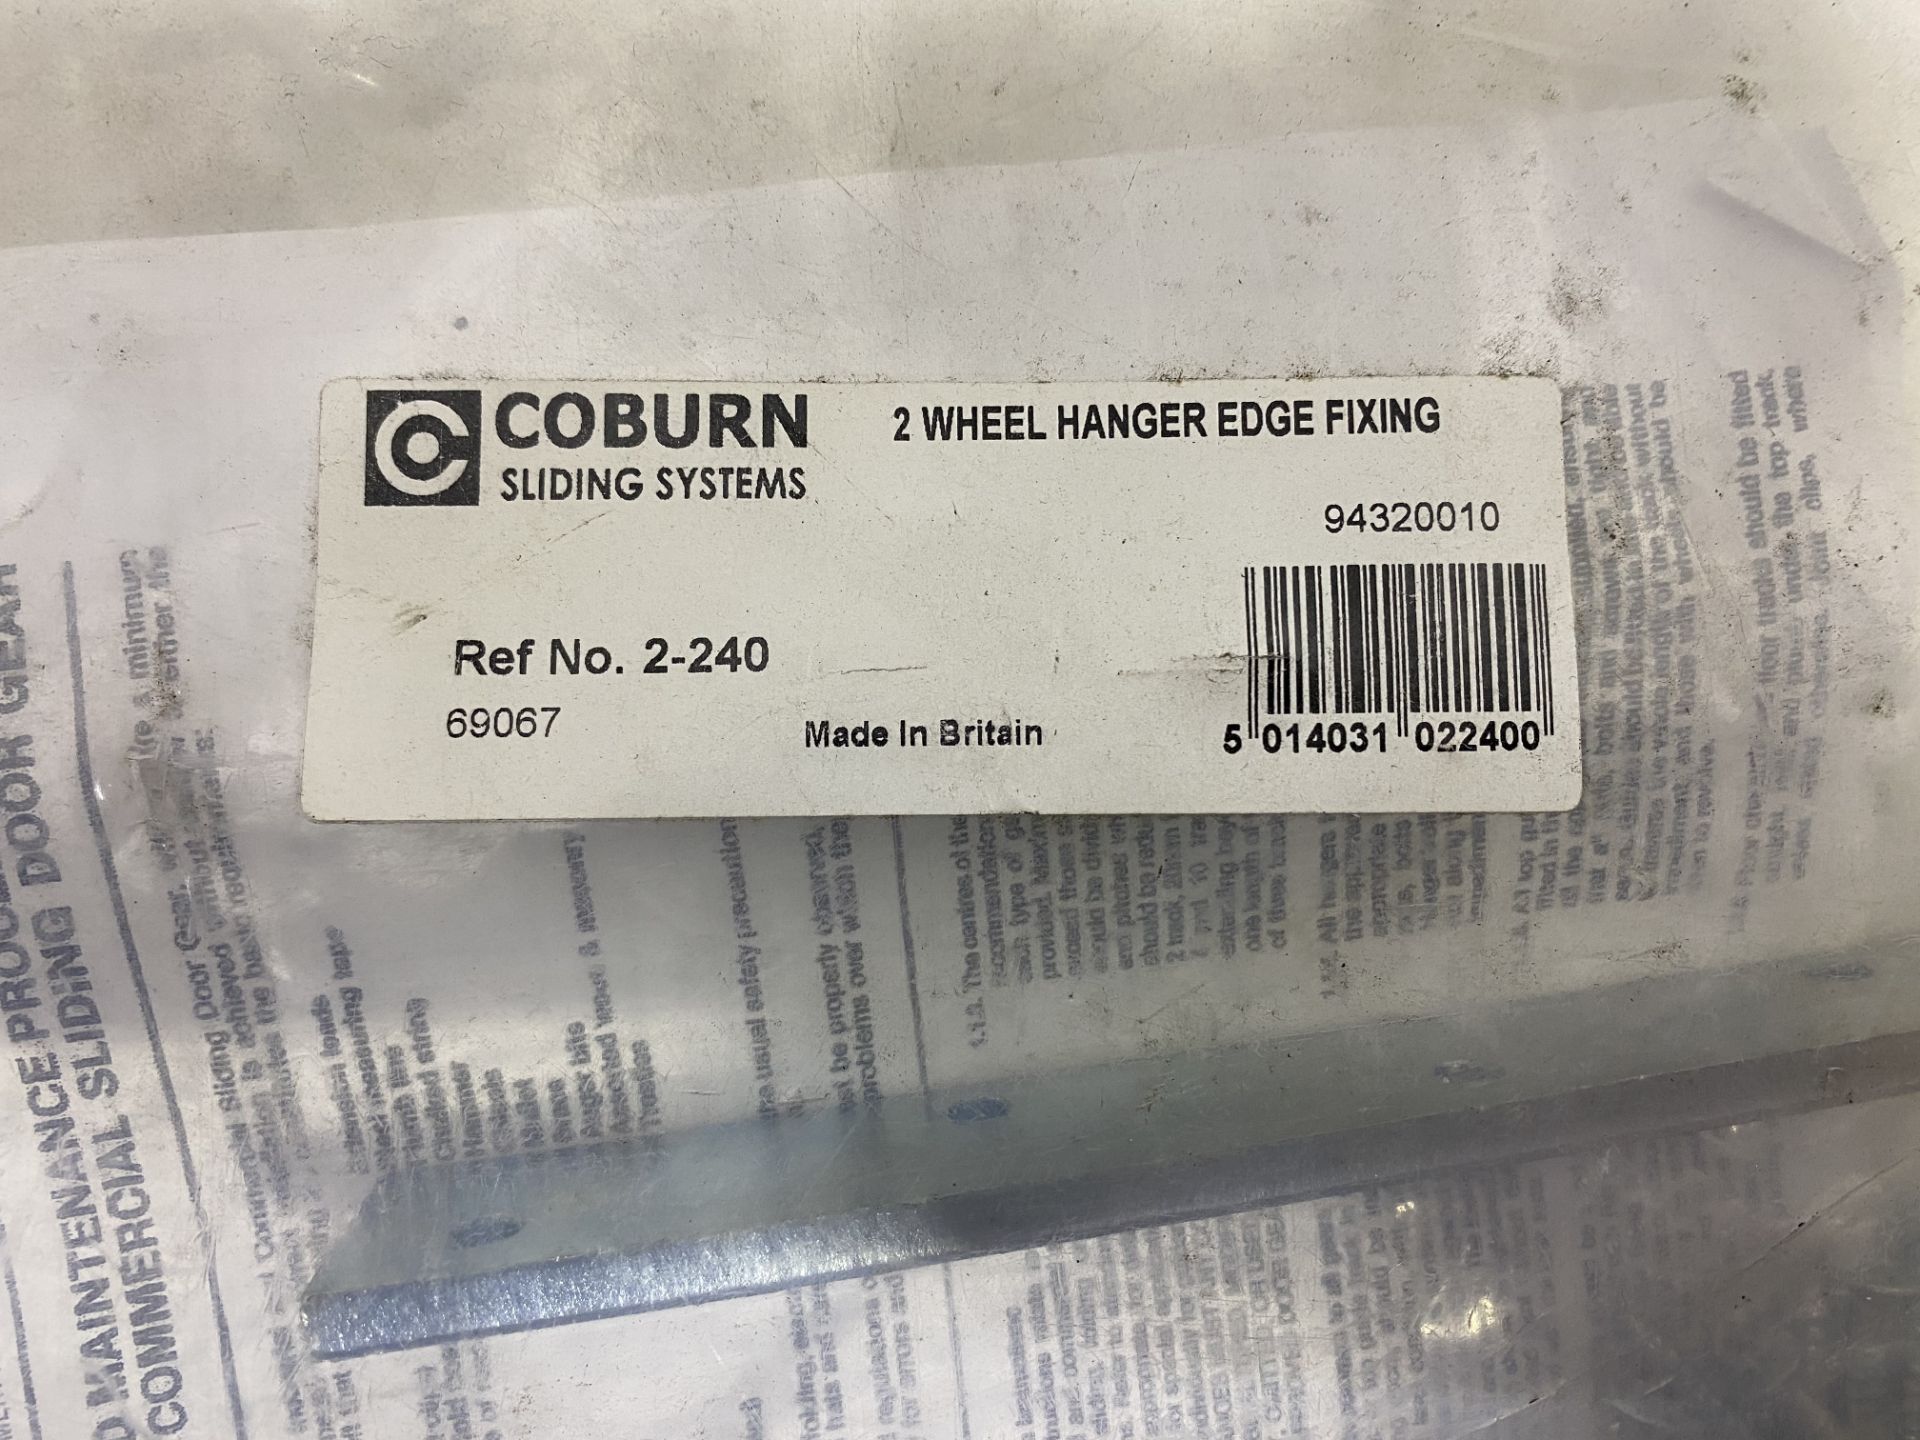 3 x Coburn 2-240 2 Wheel Hanger Edge Fixings - Image 3 of 3